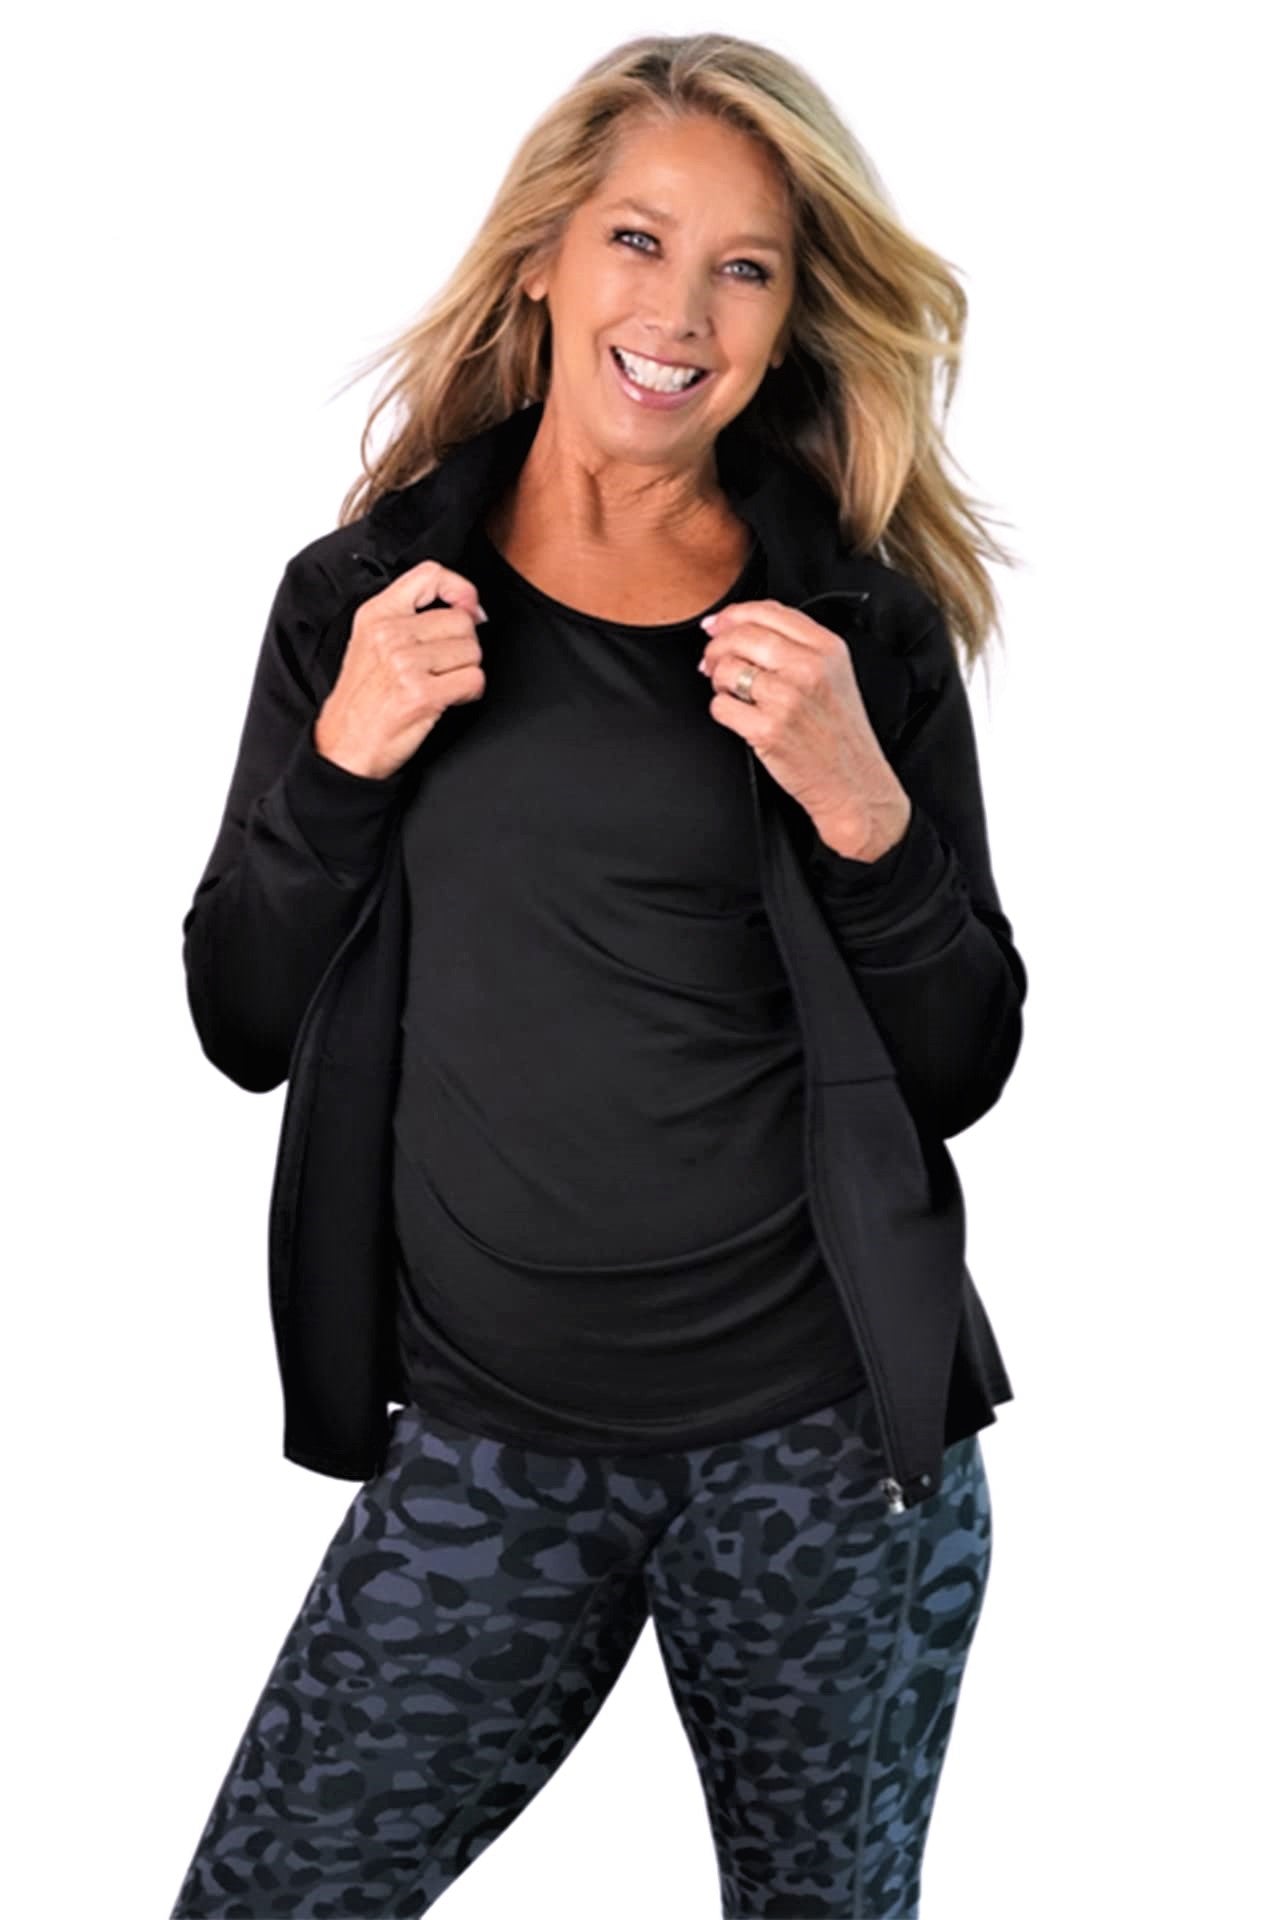 Denise Austin's Sleeveless High Neck Yoga Tank Top - Cool Workout T-Shirt  for Summer